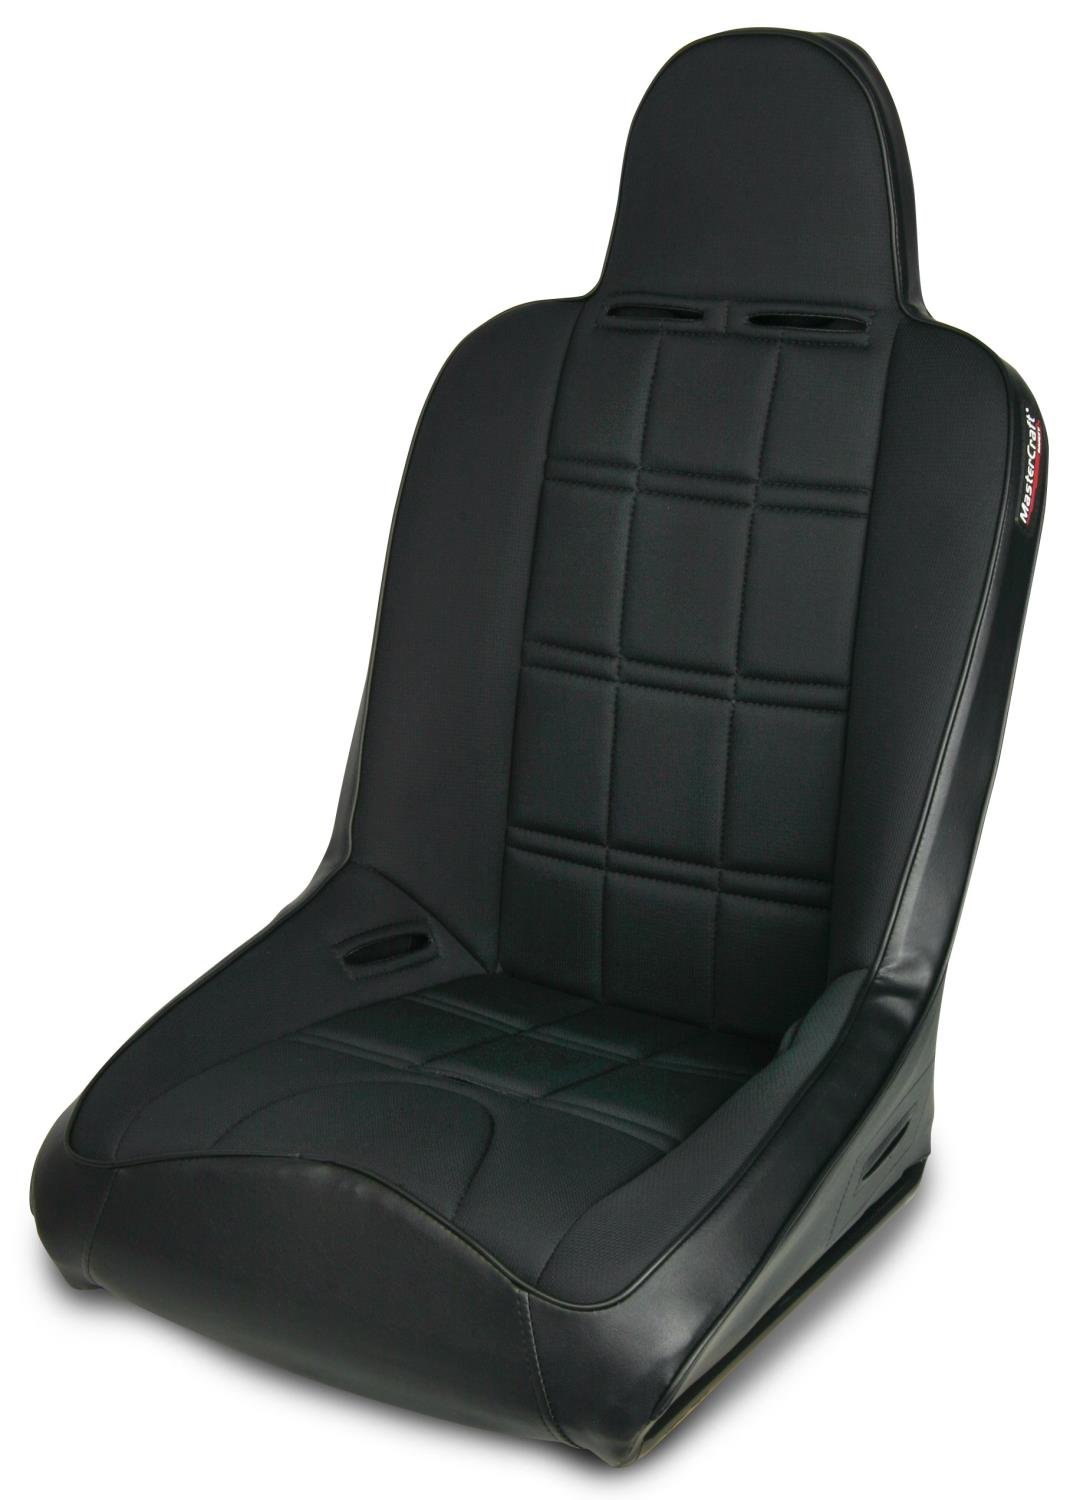 530004 Nomad Seat w/Fixed Headrest, Black w/Black Center